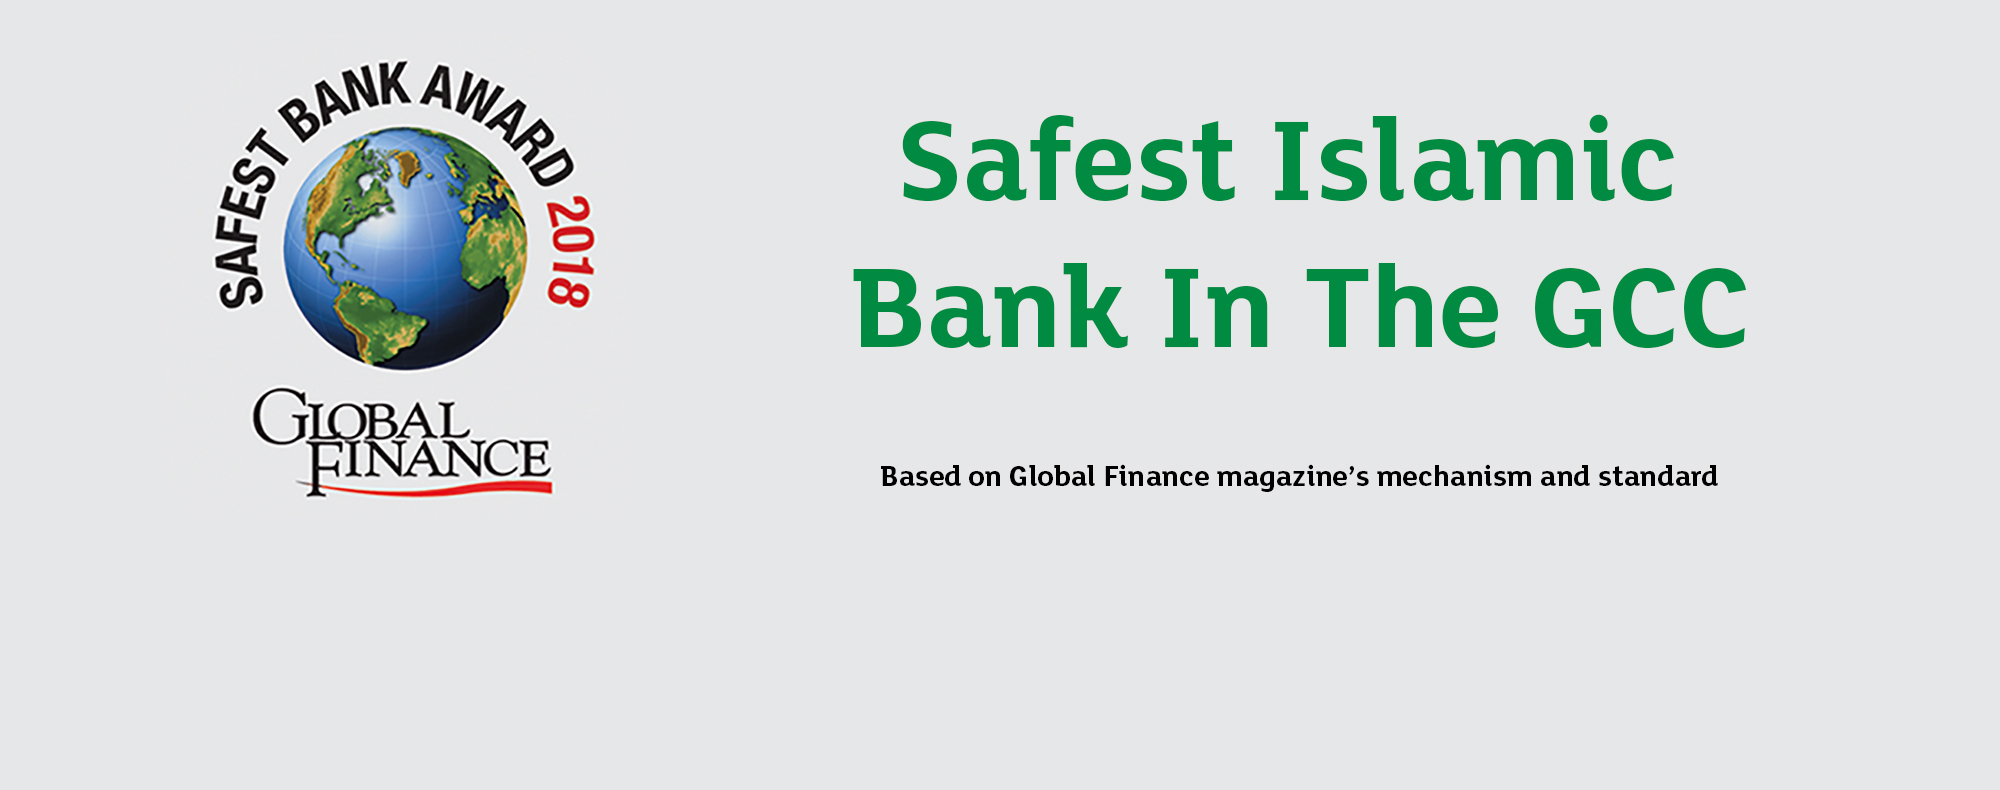 KFH the Safest Islamic Bank in GCC 2018